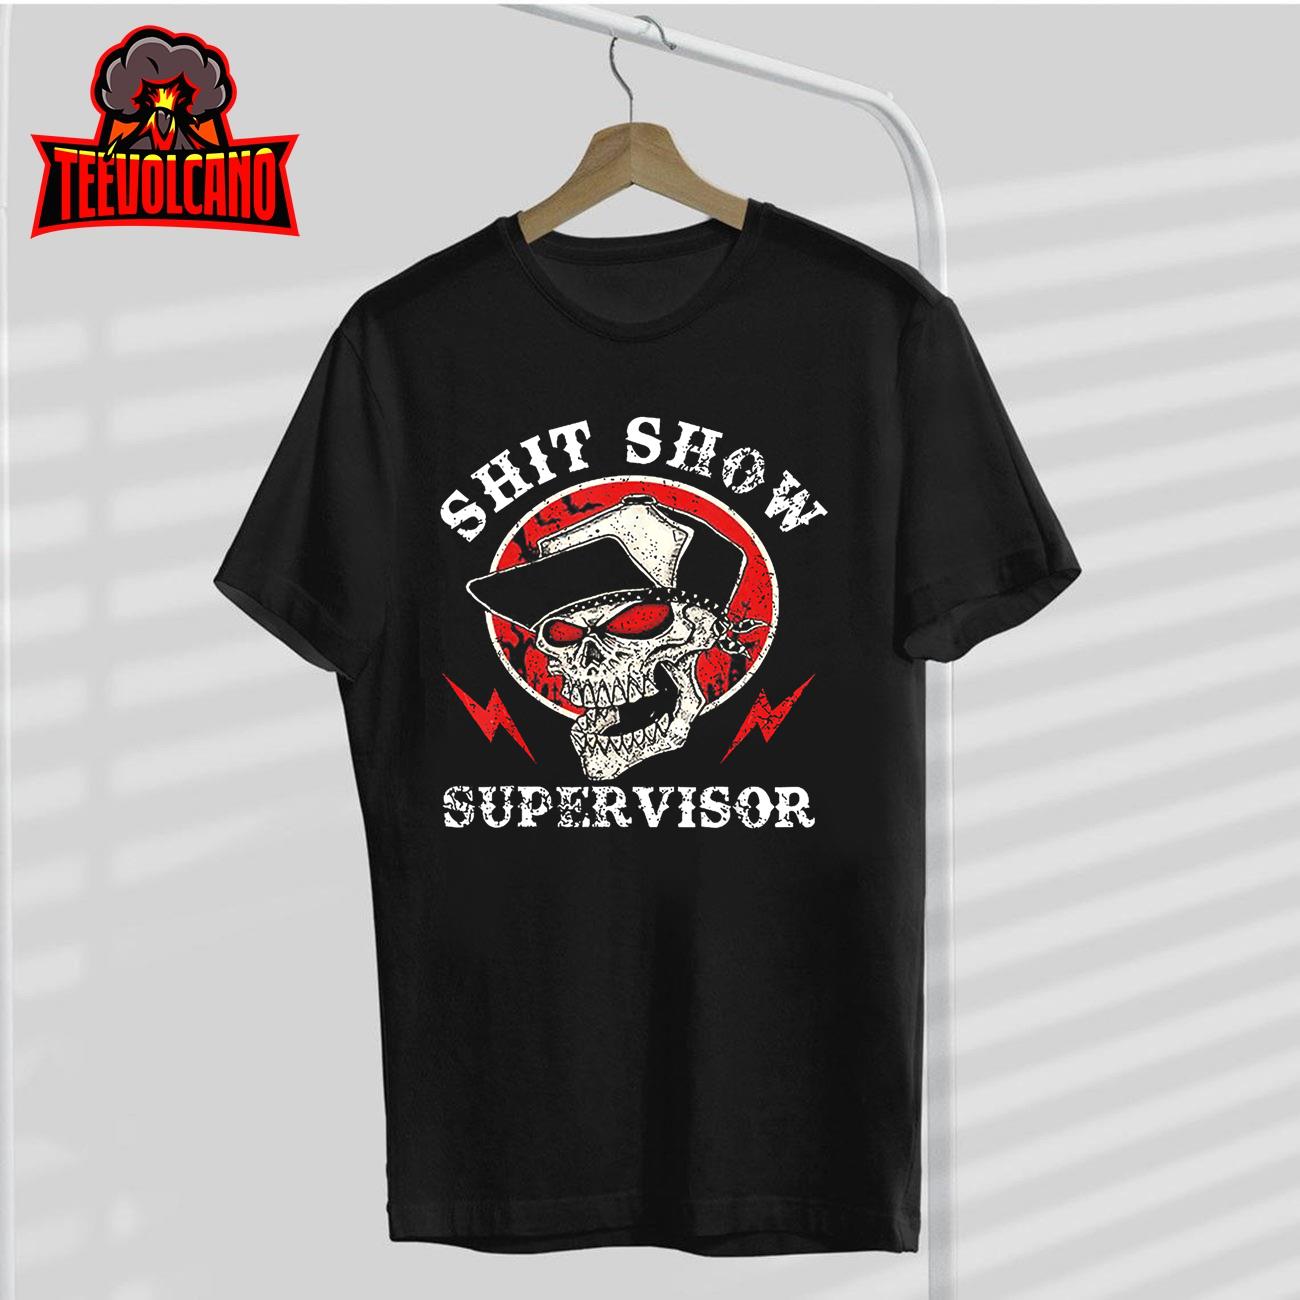 Shit Show Supervisor Skull T-Shirt